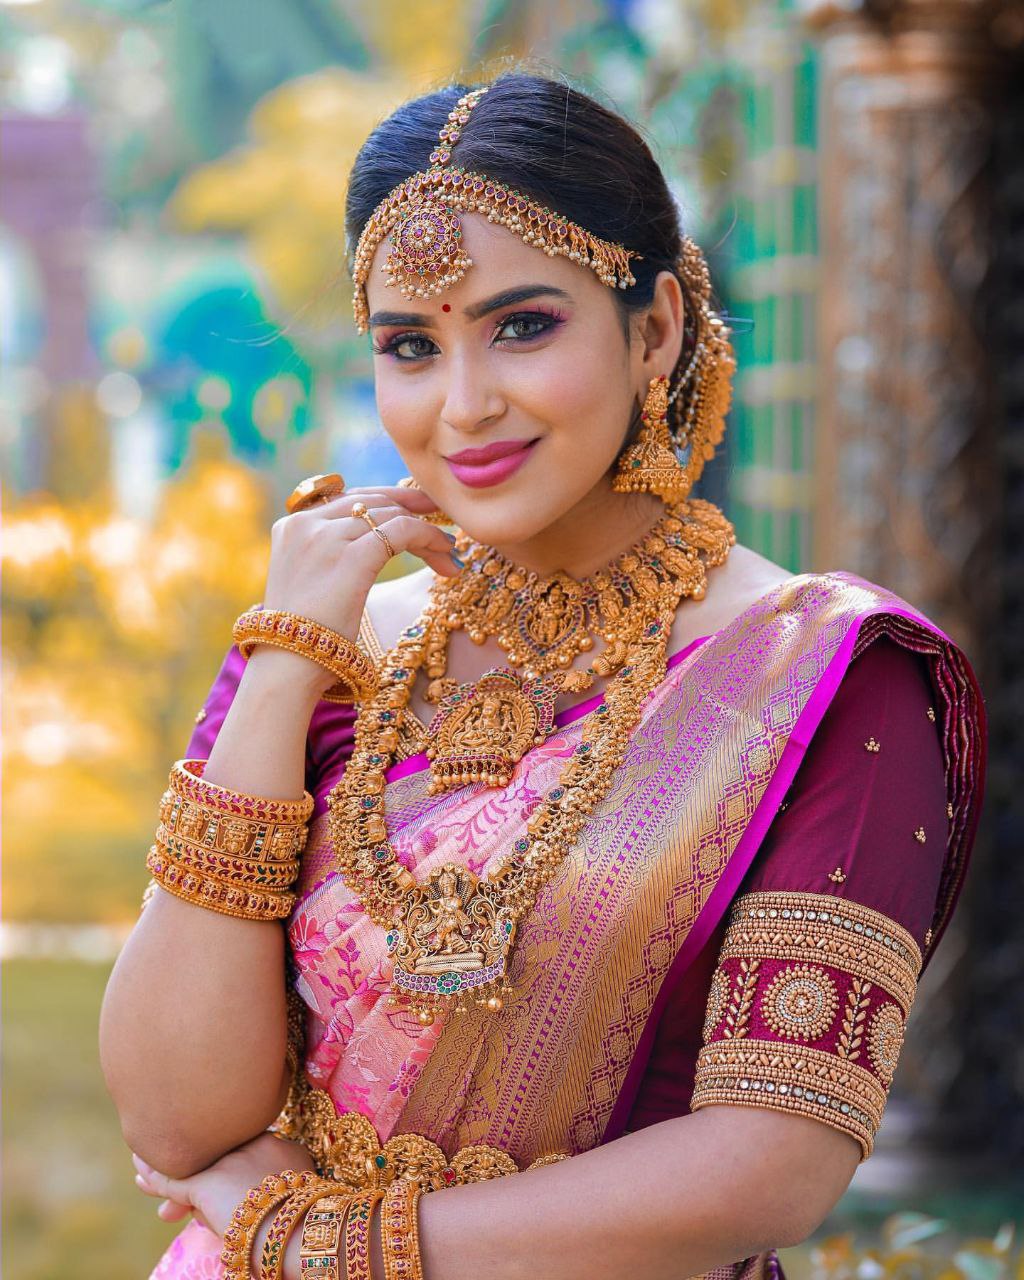 Designer Pink Kanjeevaram Pure Silk Saree For Women